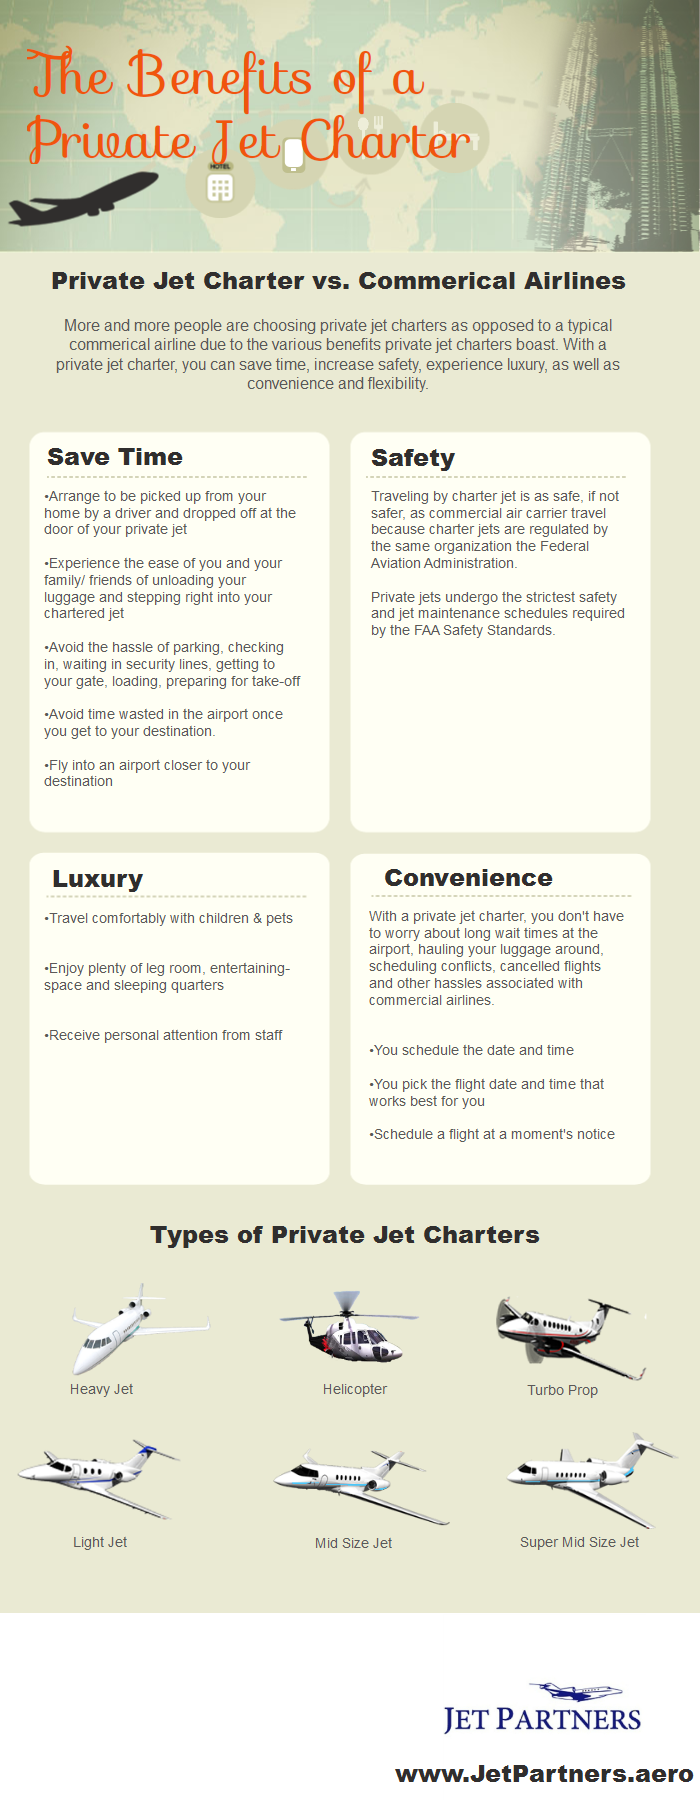 Jet Partners Infographic